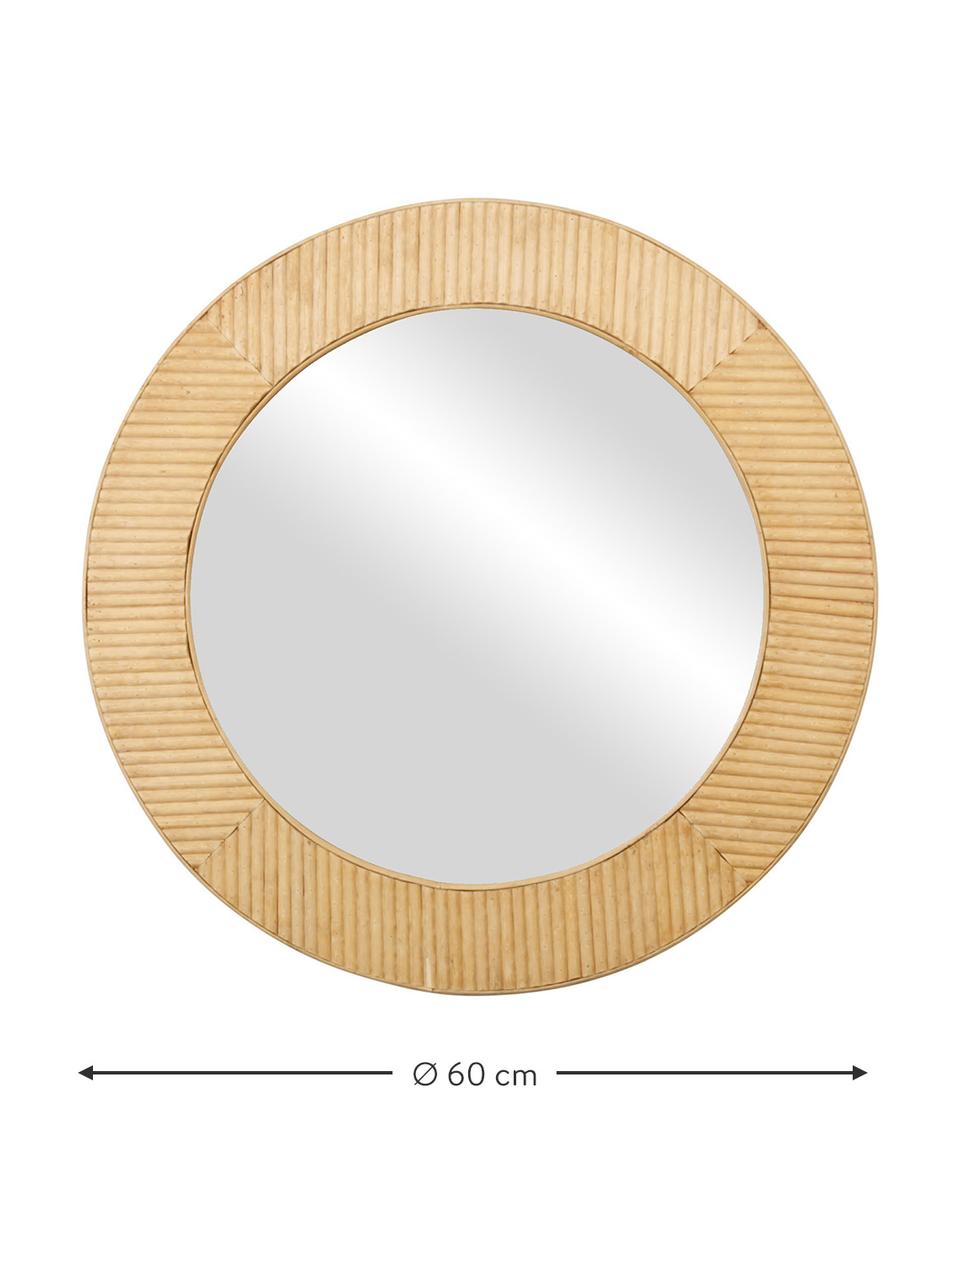 Kulaté nástěnné zrcadlo s bambusovým rámem Solair, Bambus, Ø 60 cm, H 2 cm